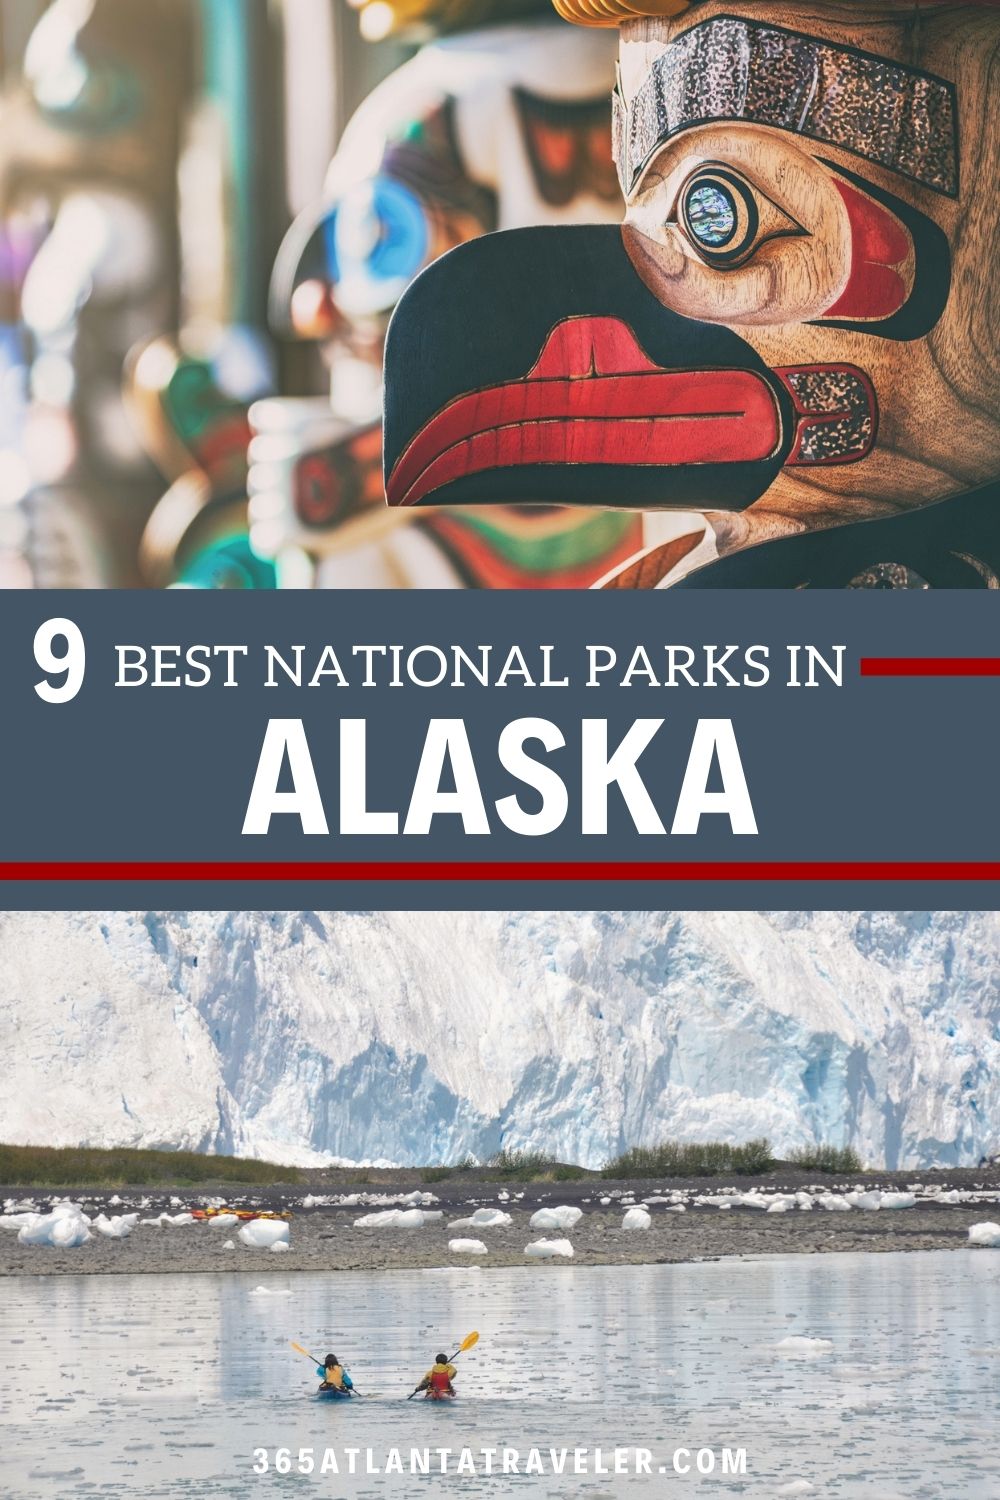 9 ALASKA NATIONAL PARKS YOU'VE GOT TO EXPLORE